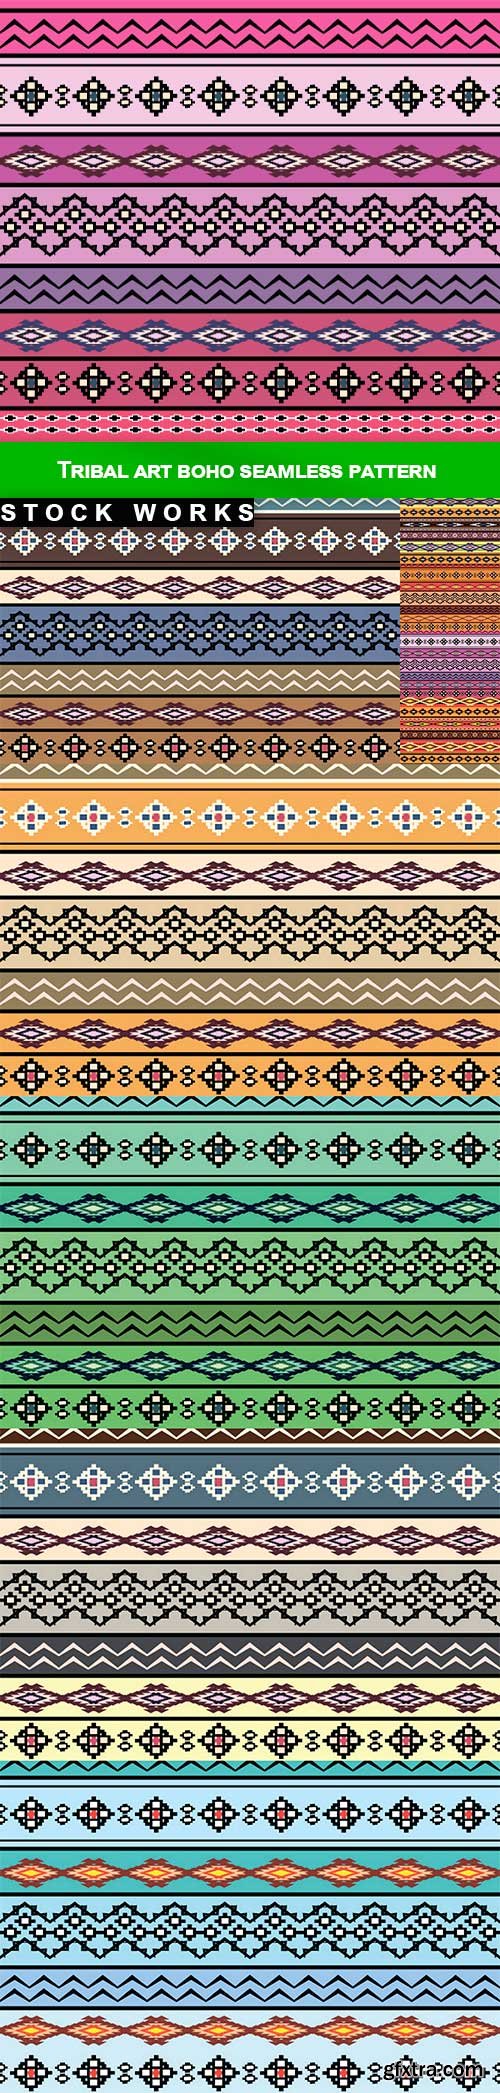 Tribal art boho seamless pattern - 9 EPS